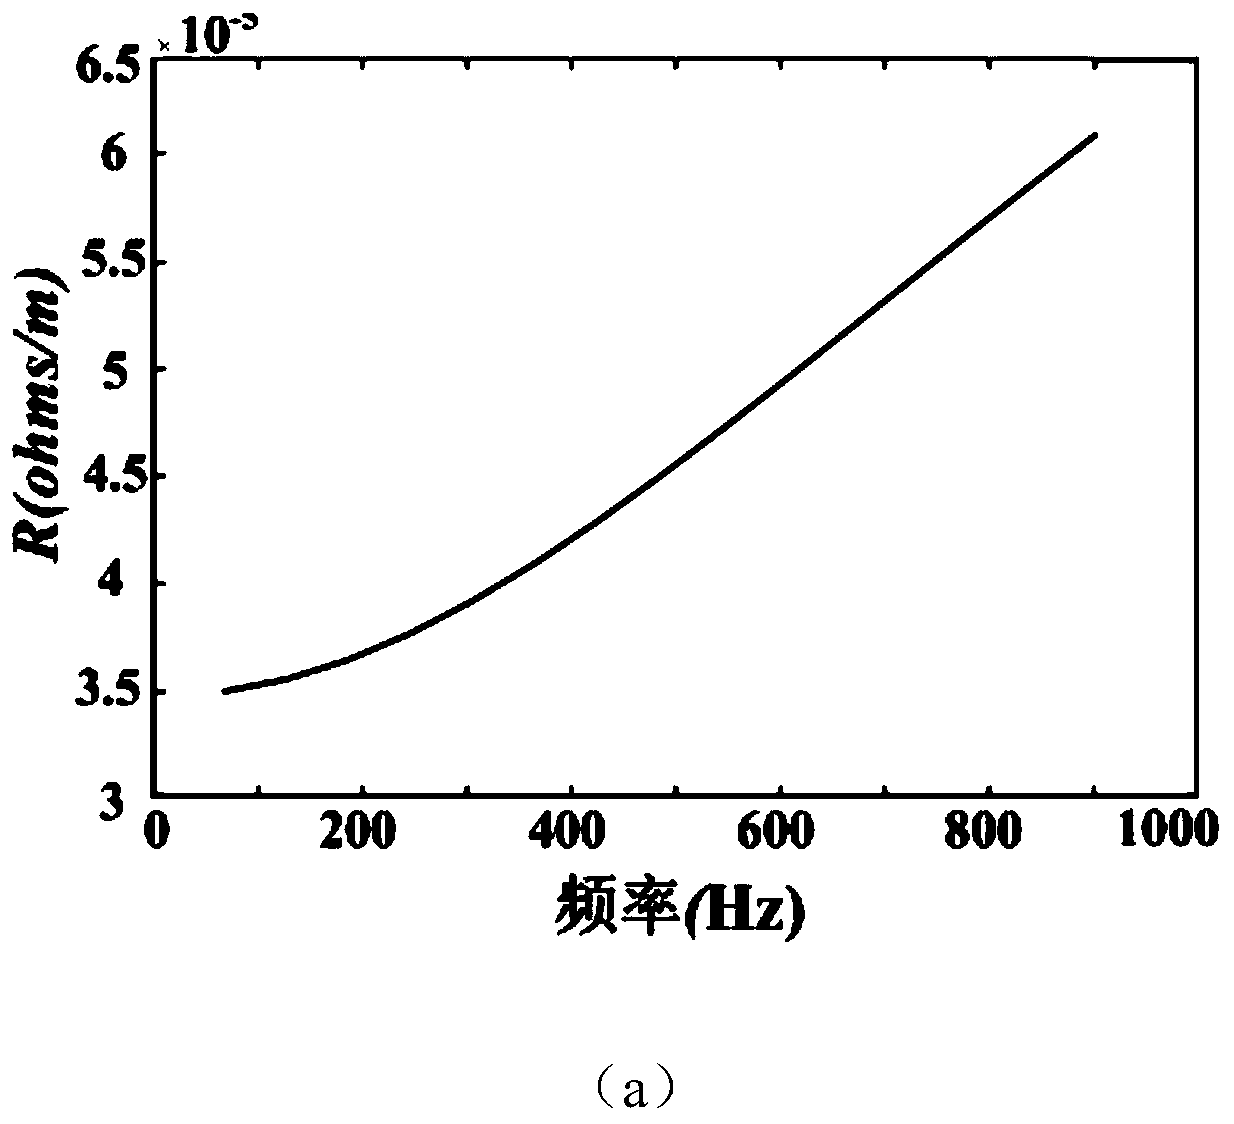 Power transmission line harmonic parameter estimation method for power grid harmonic analysis